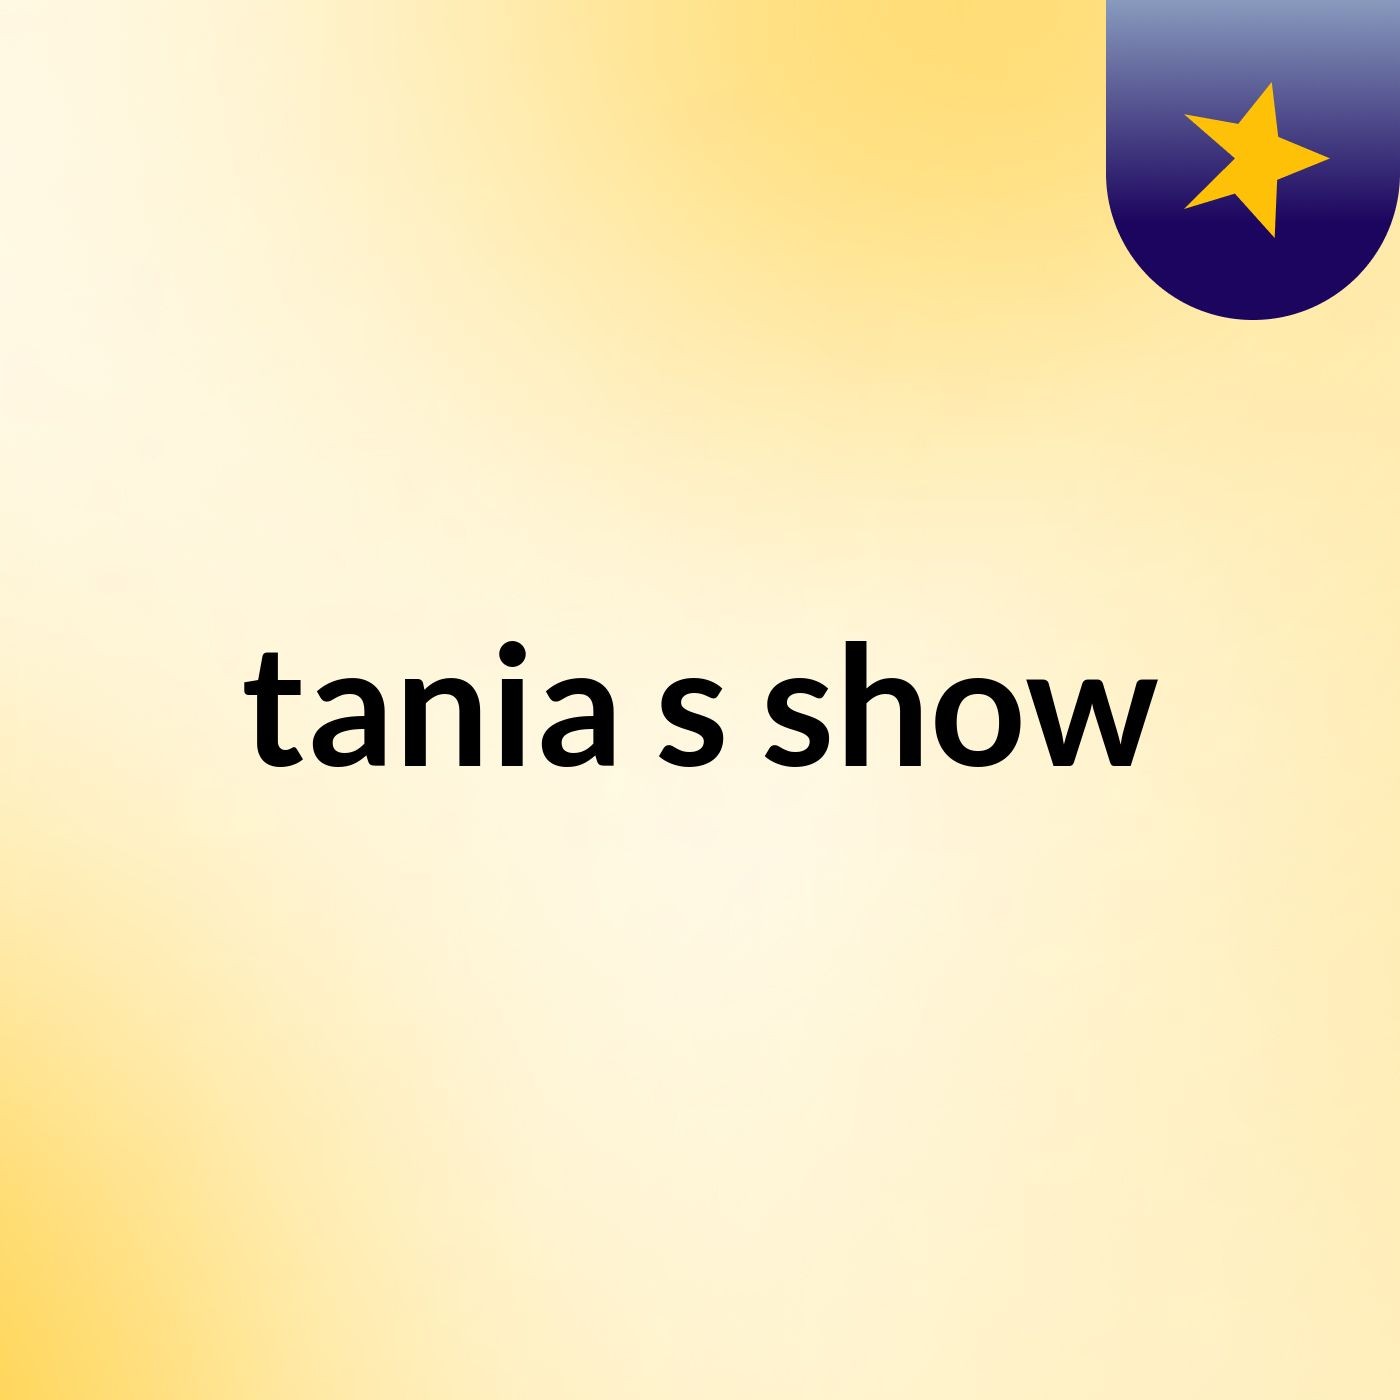 tania's show